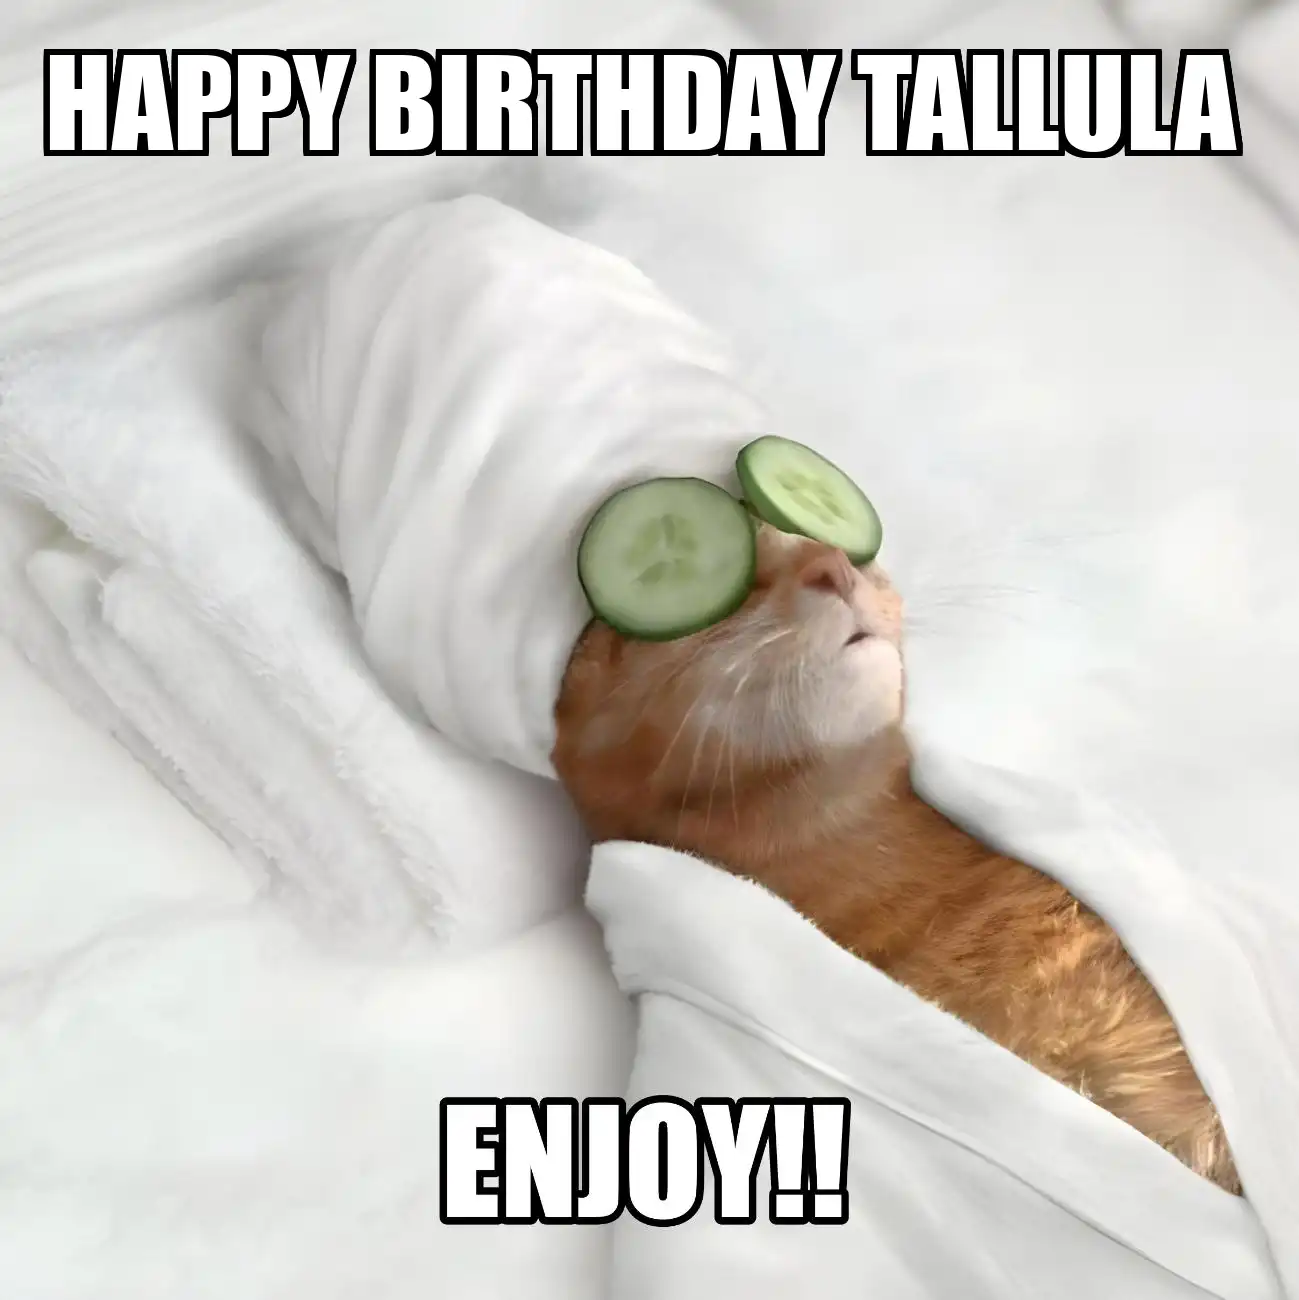 Happy Birthday Tallula Enjoy Cat Meme